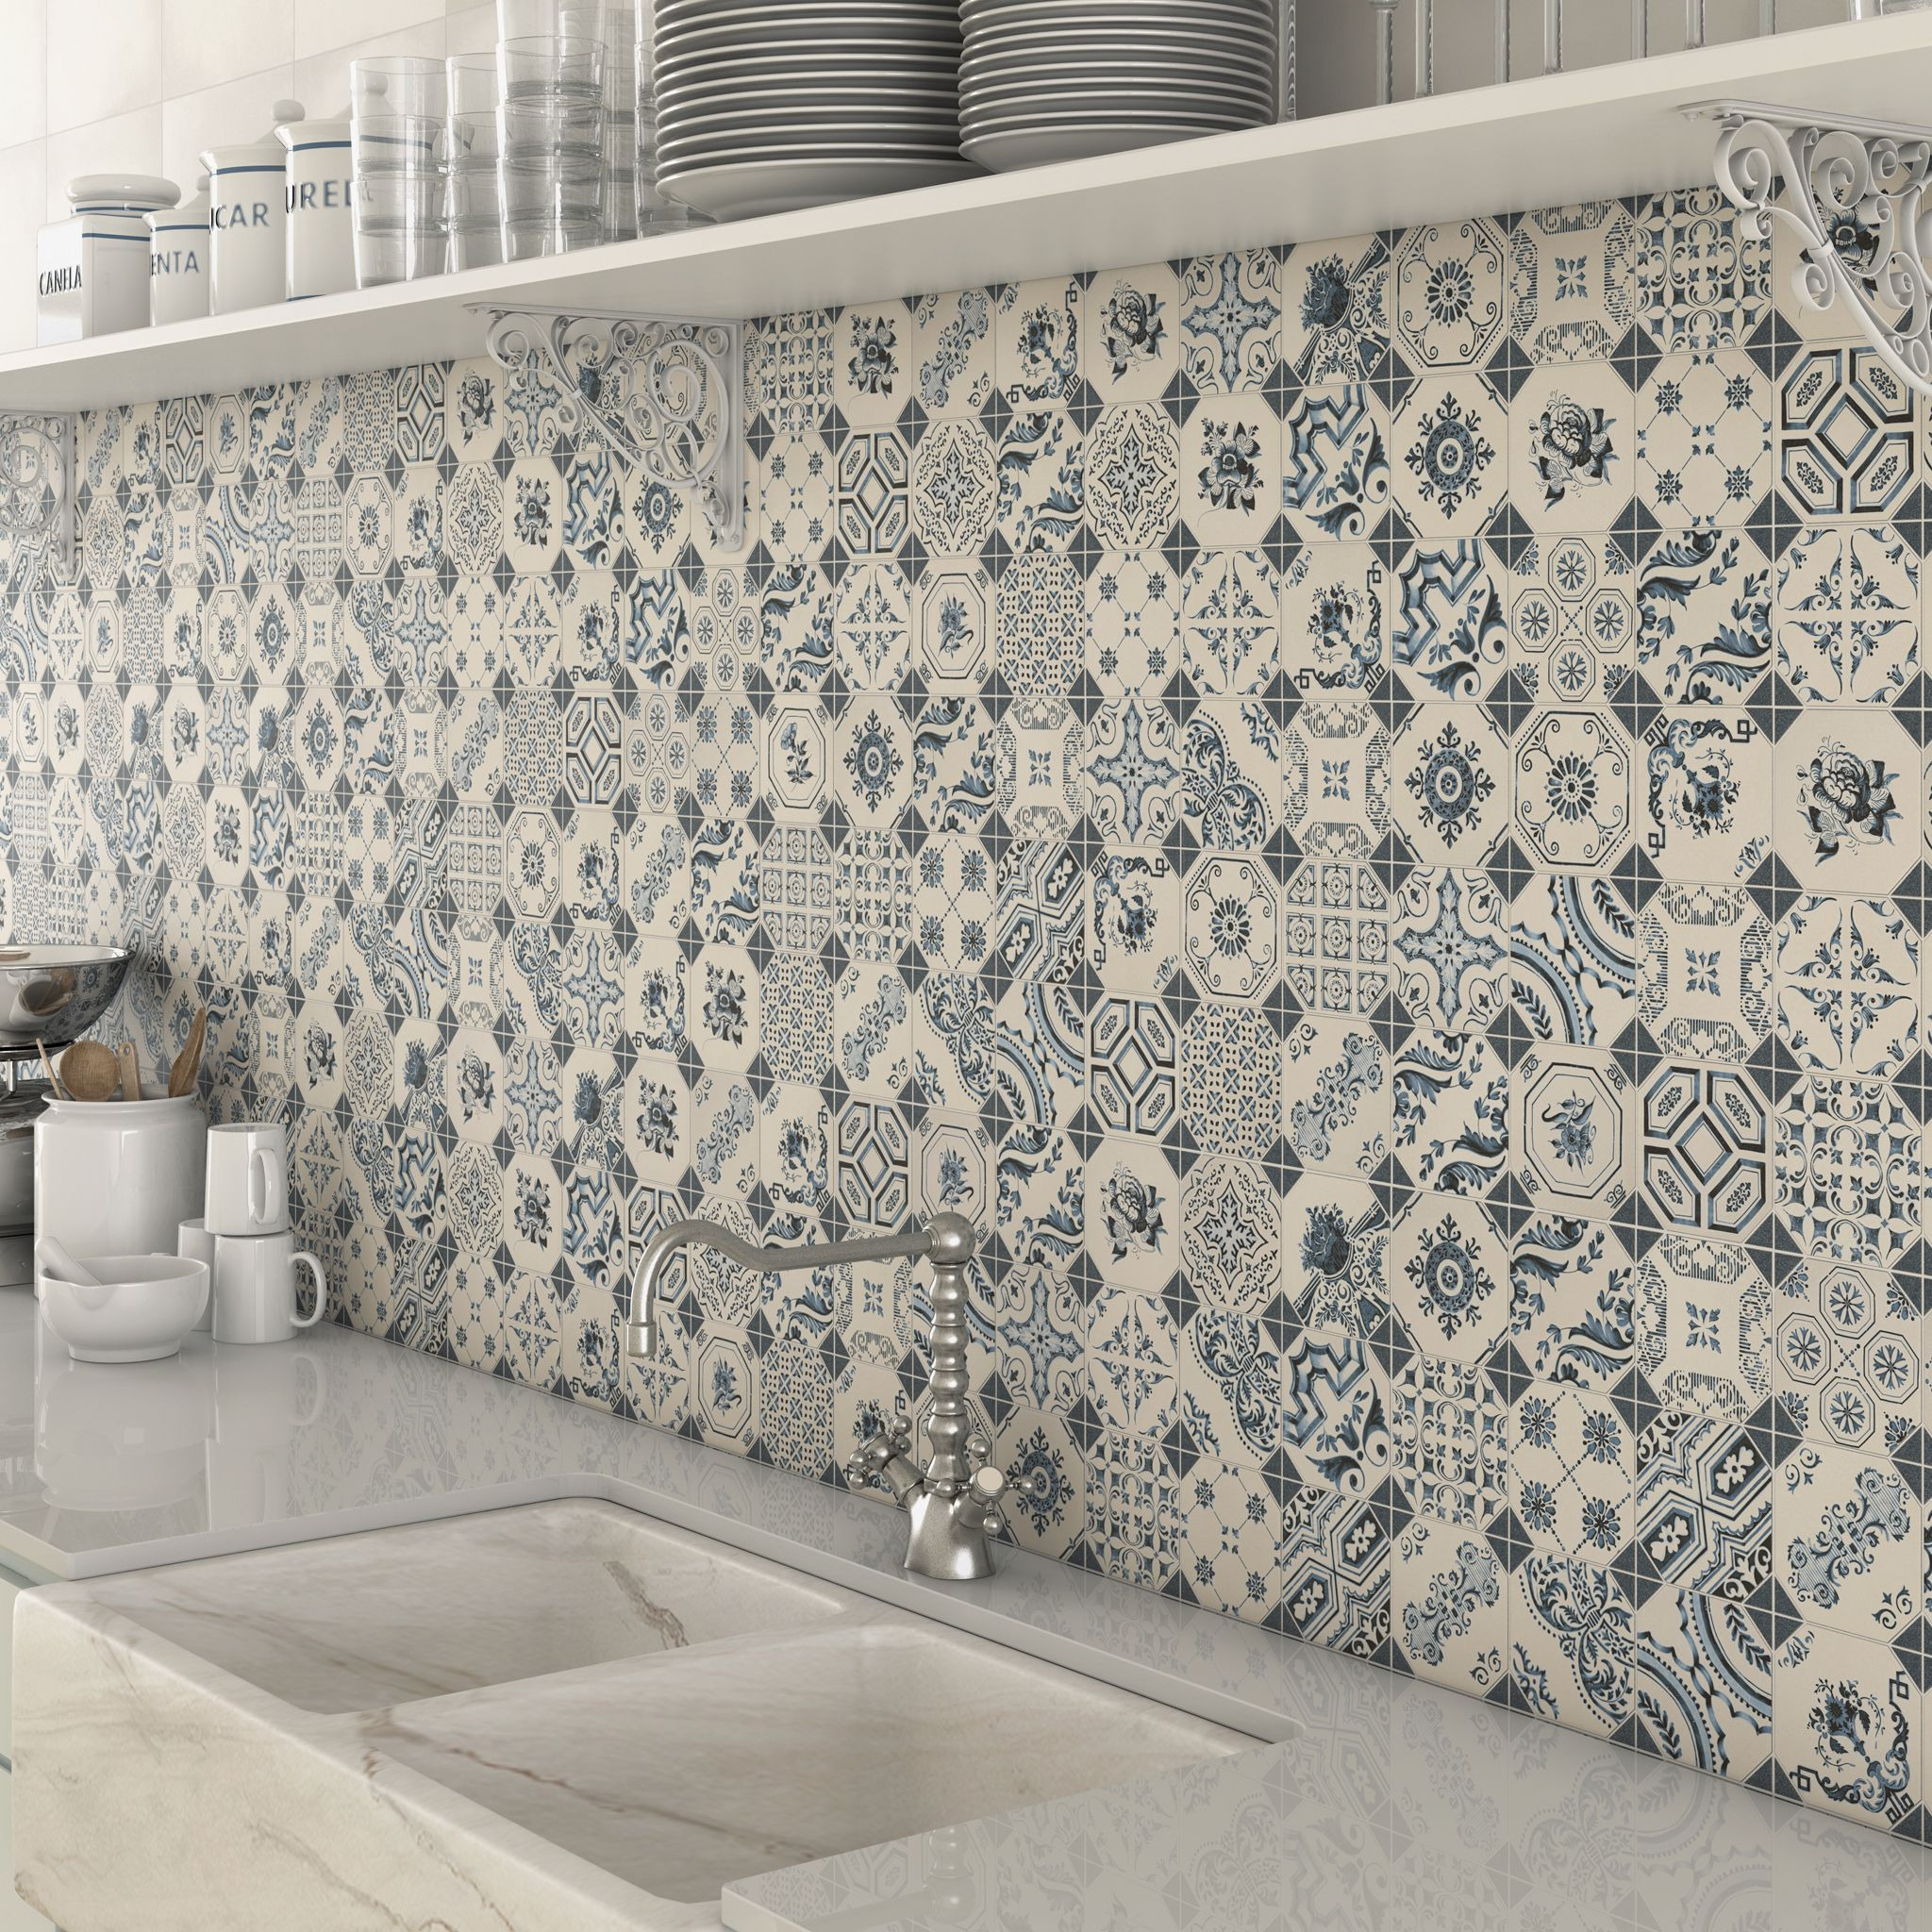 Kitchen Mosaic Tiles
 70 MUST SEE Kitchen Splashback Ideas for 2019 Kitchen